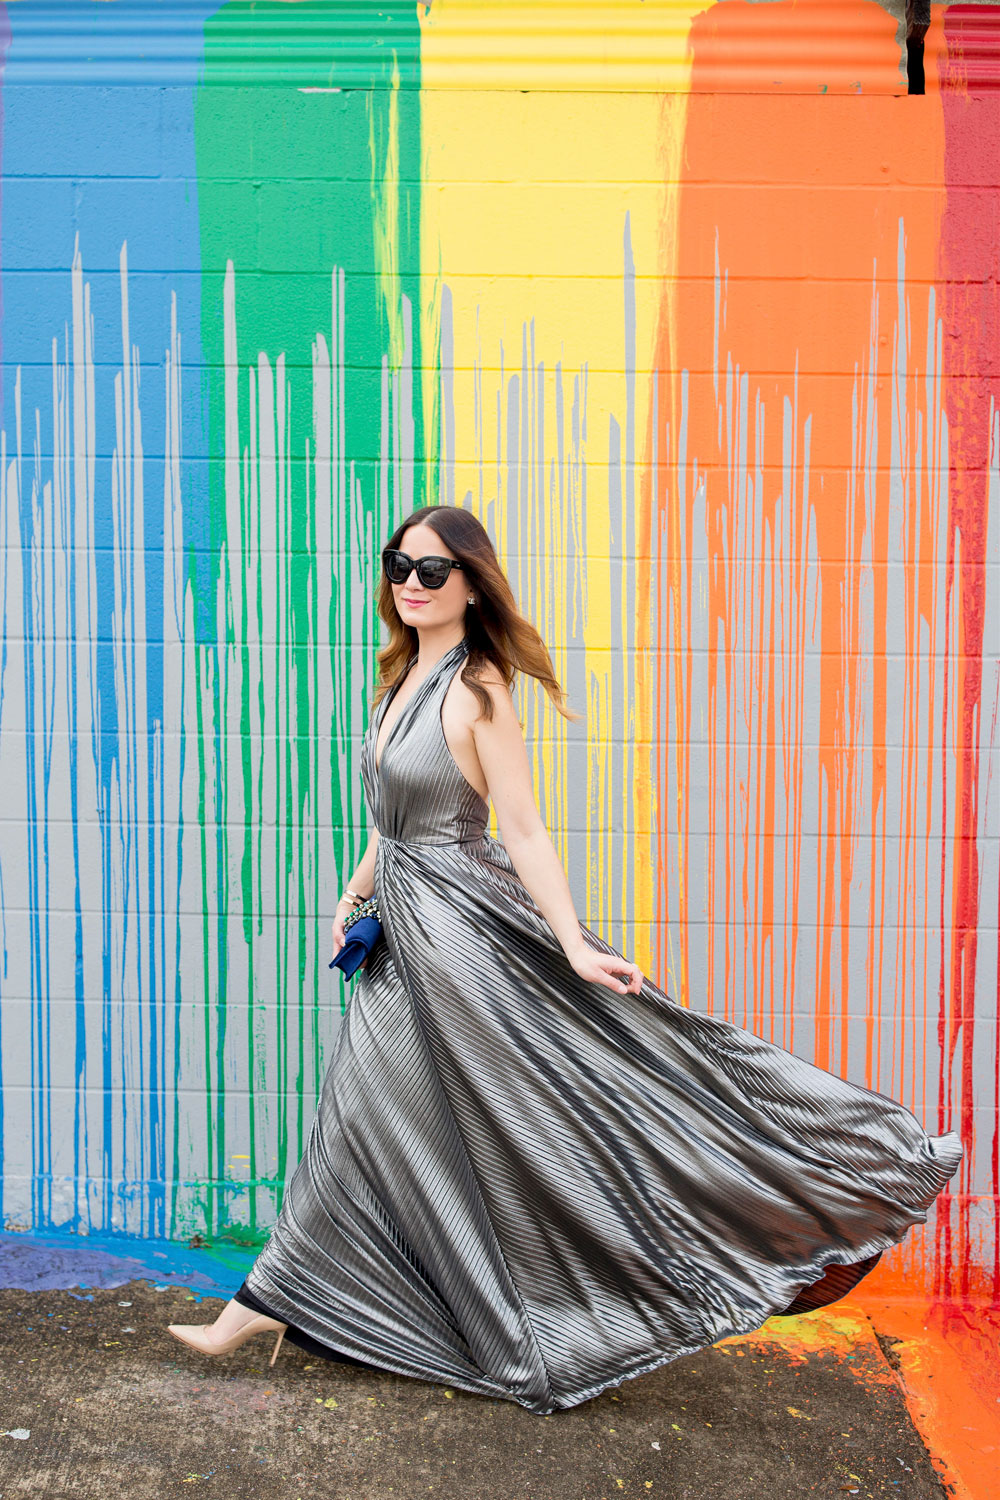 Colorful Houston Walls